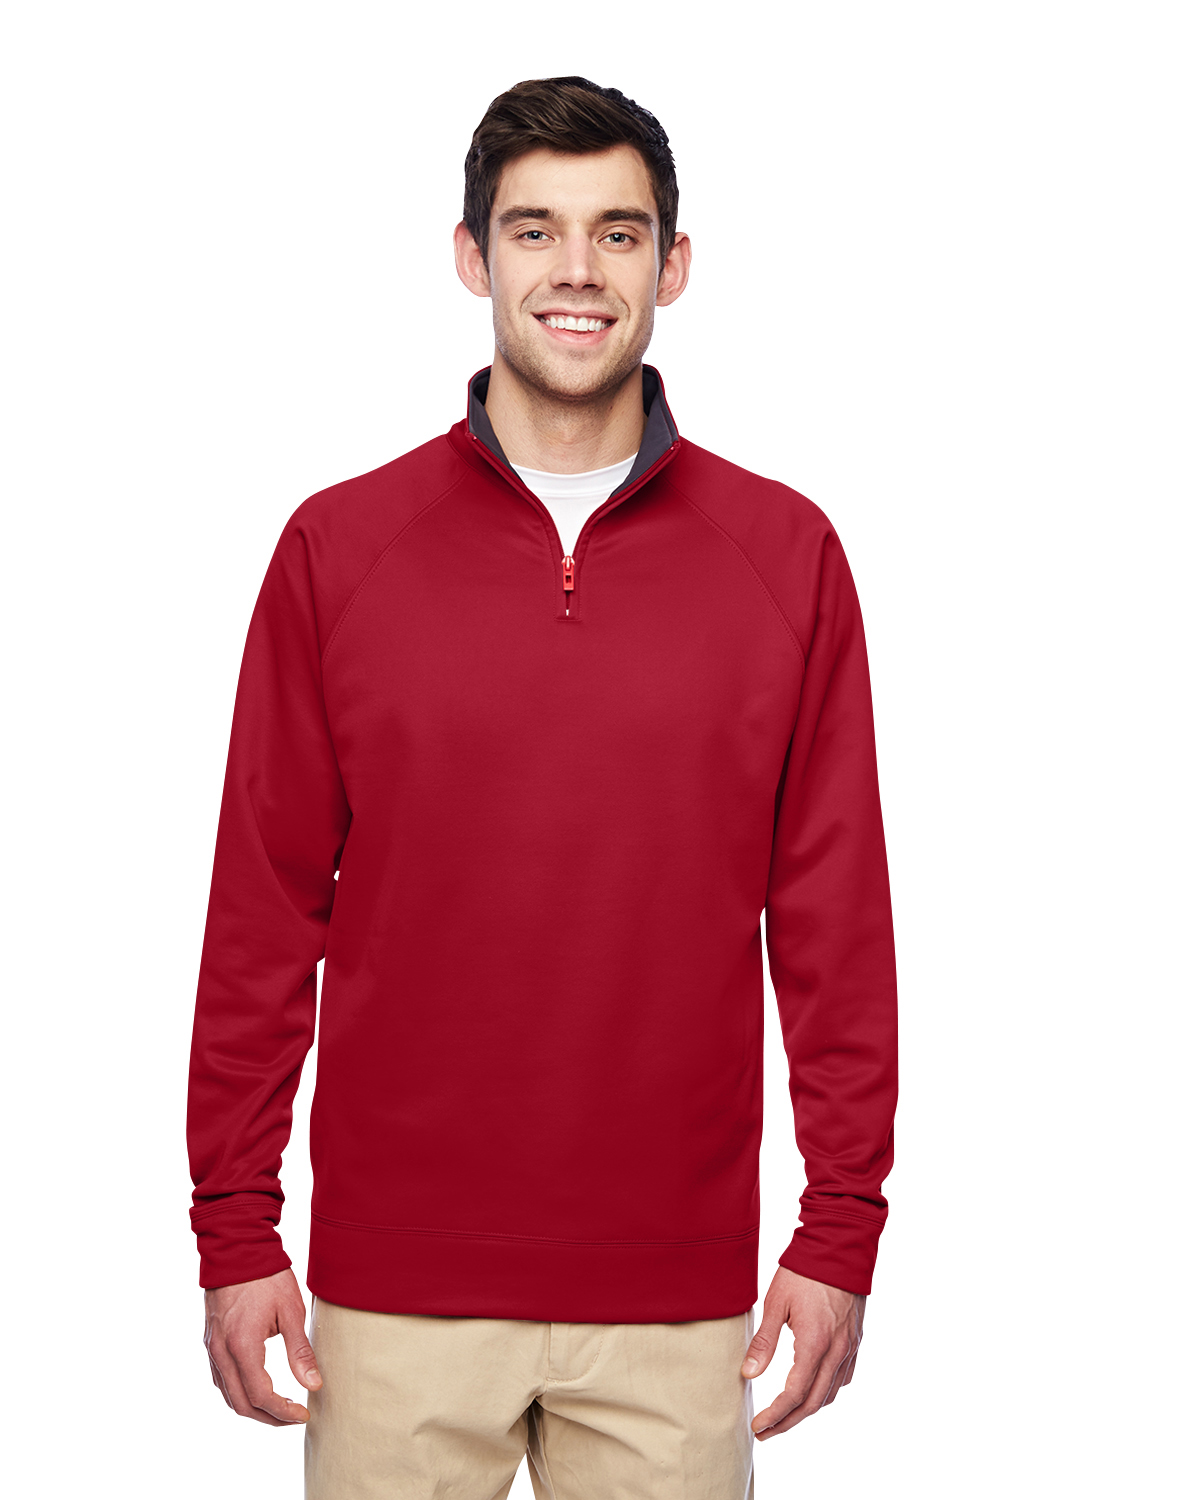 PF95MR Jerzees Adult 6 oz. DRI-POWER® SPORT Quarter-Zip Cadet Collar Sweatshirt